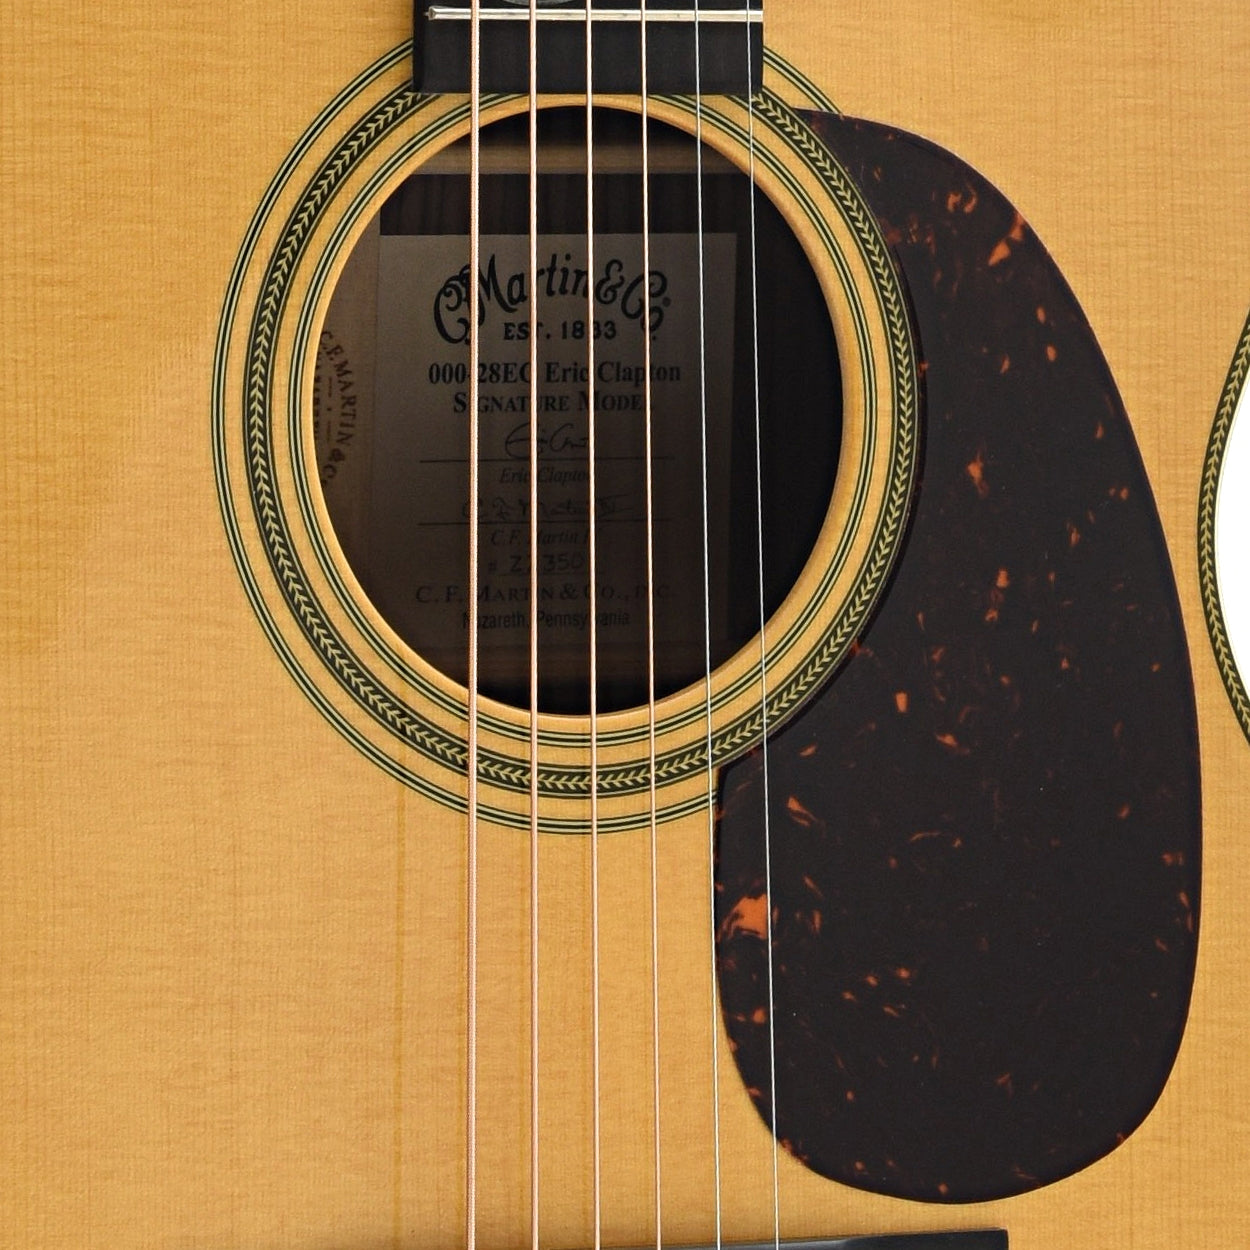 Soundhole and Pickguard of Martin 000-28EC Eric Clapton Guitar